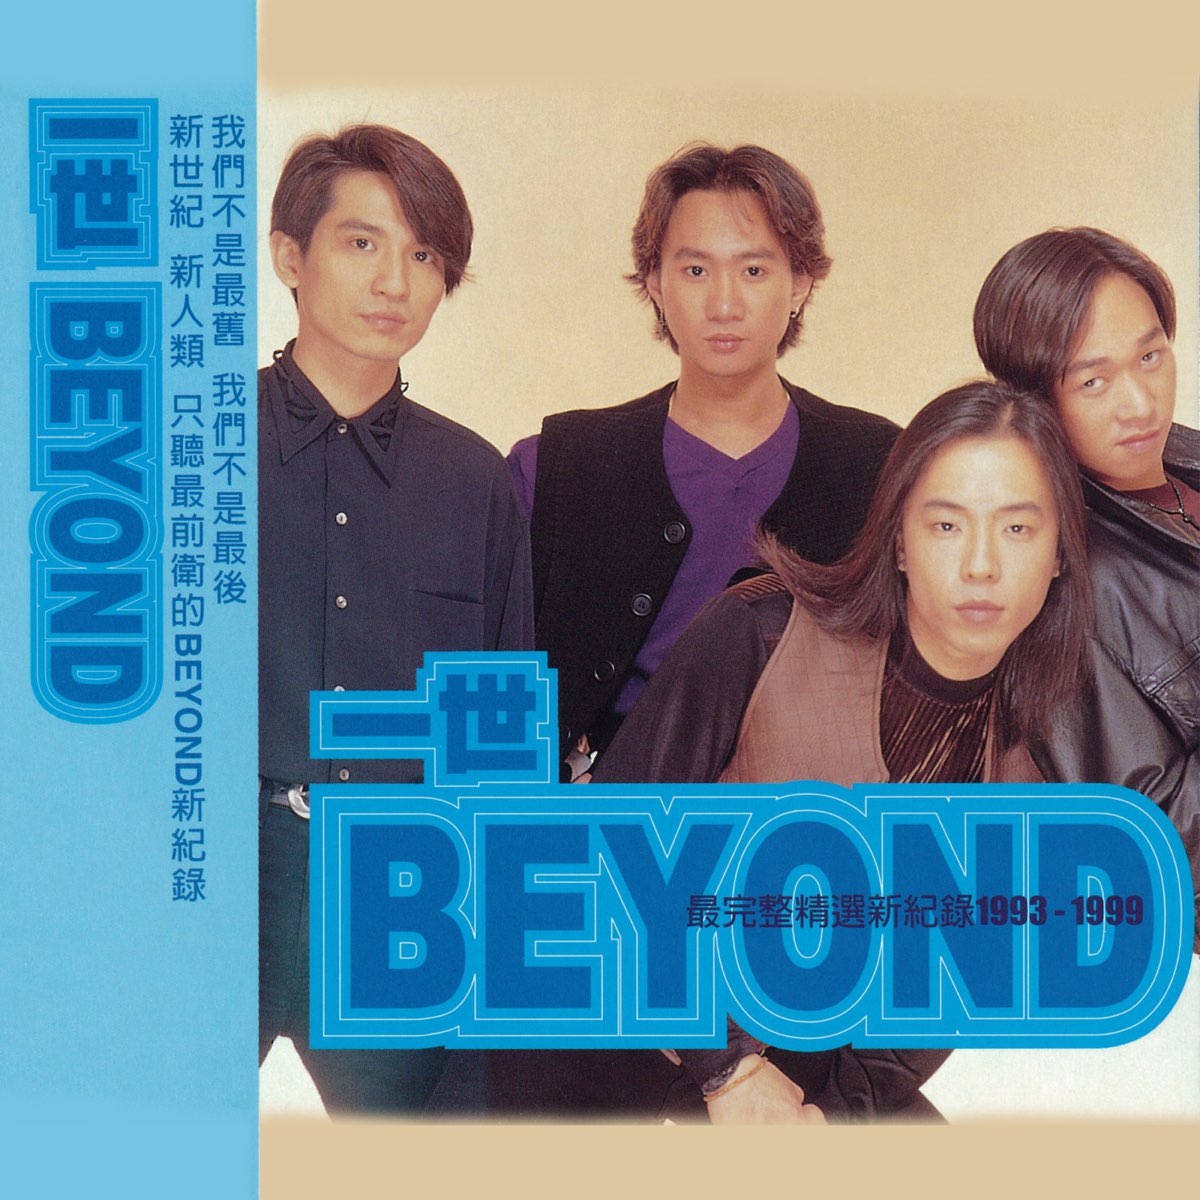 Beyond - 歌手 - 网易云音乐